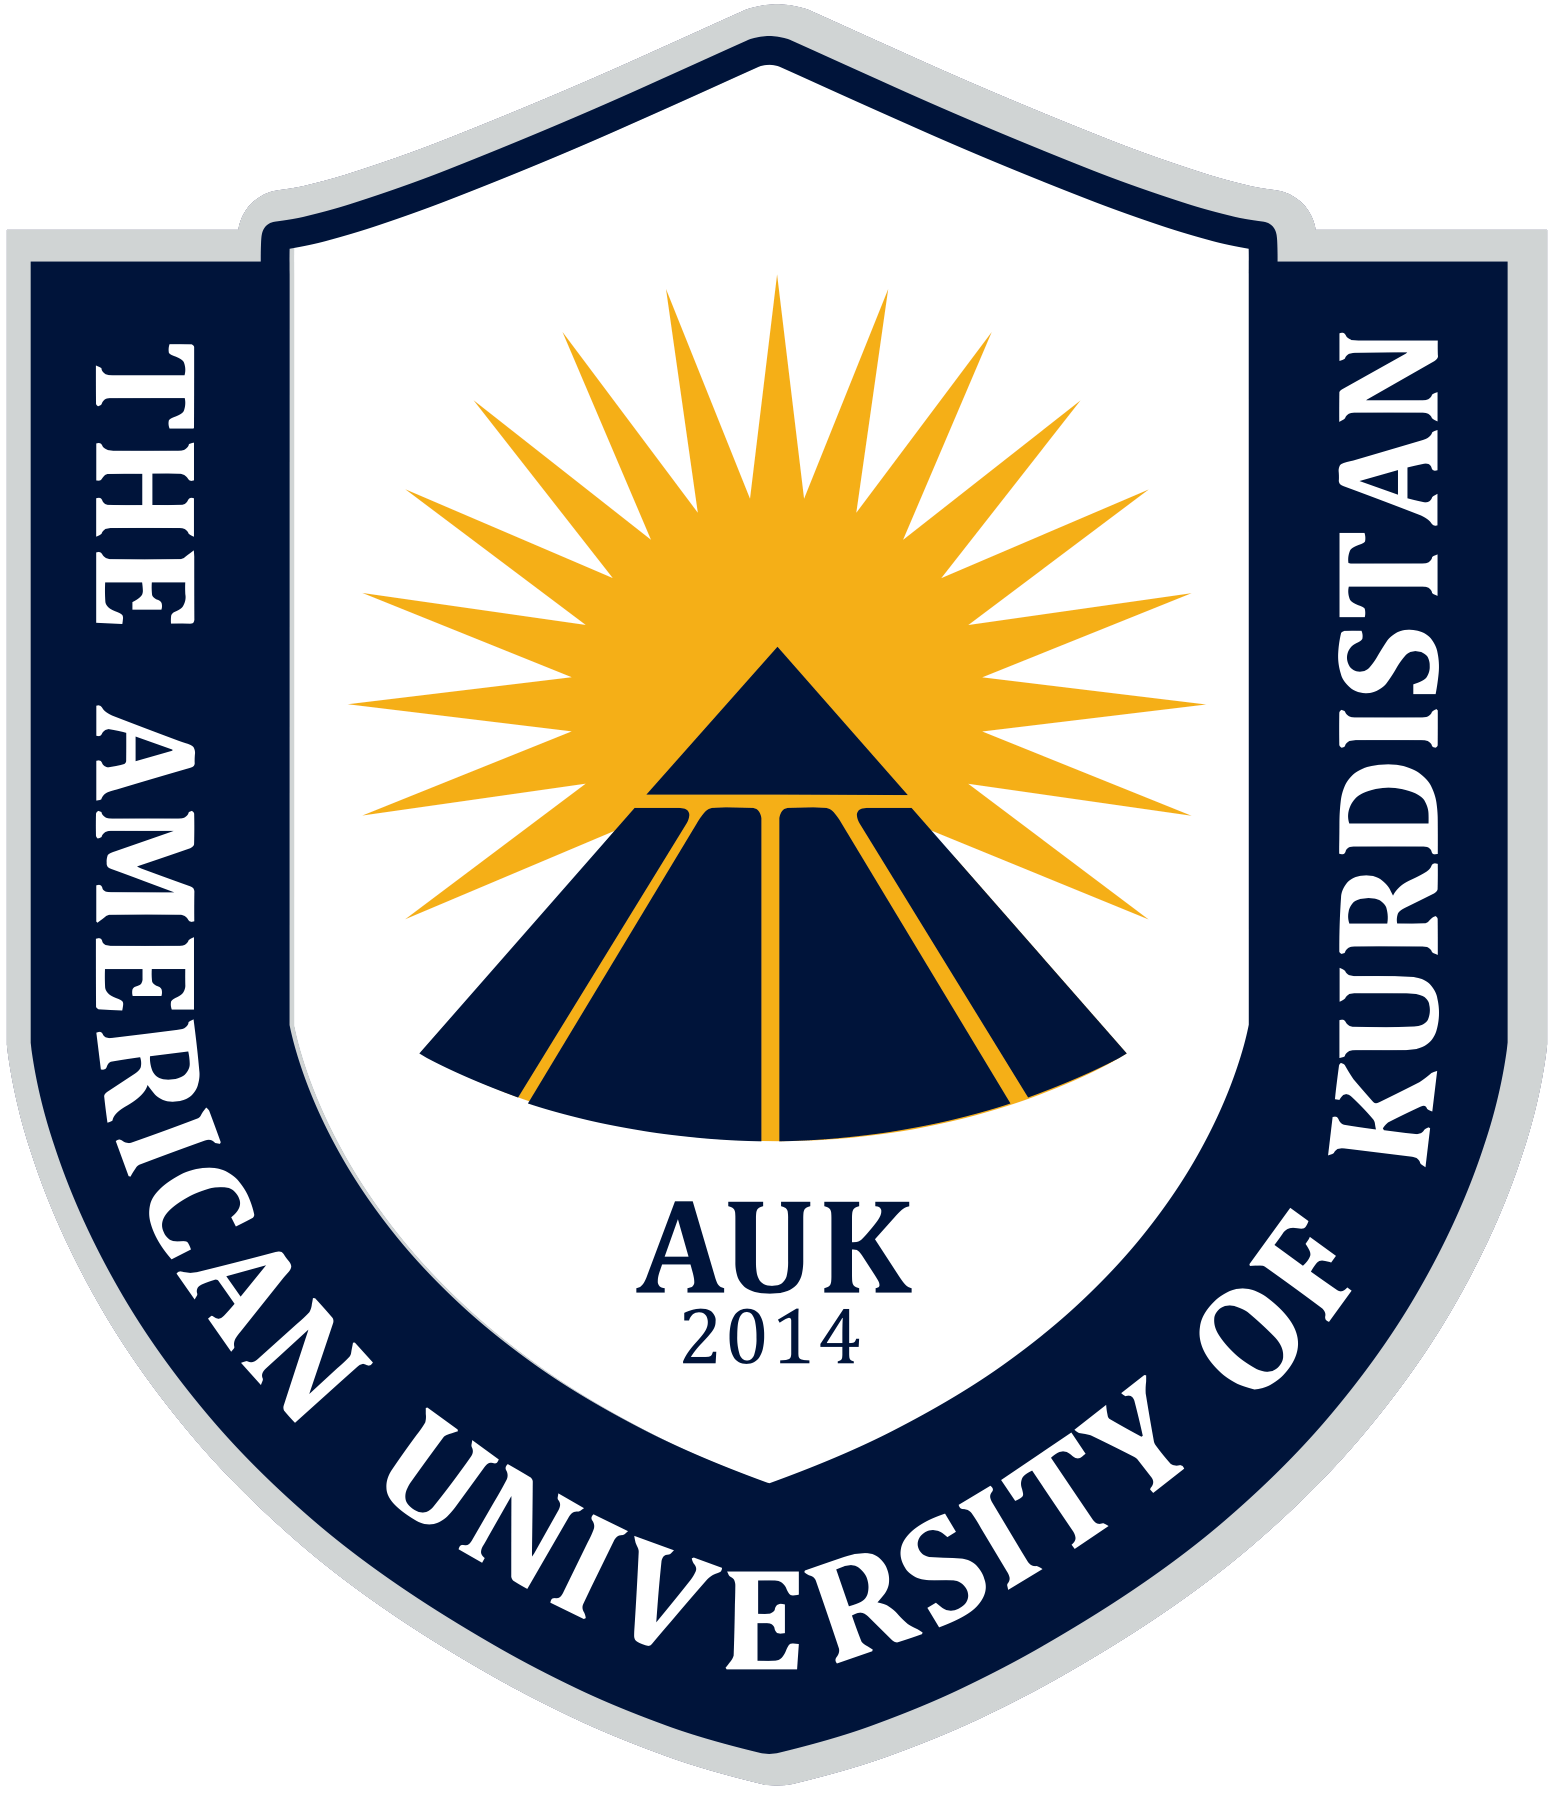 The American University of Kurdistan